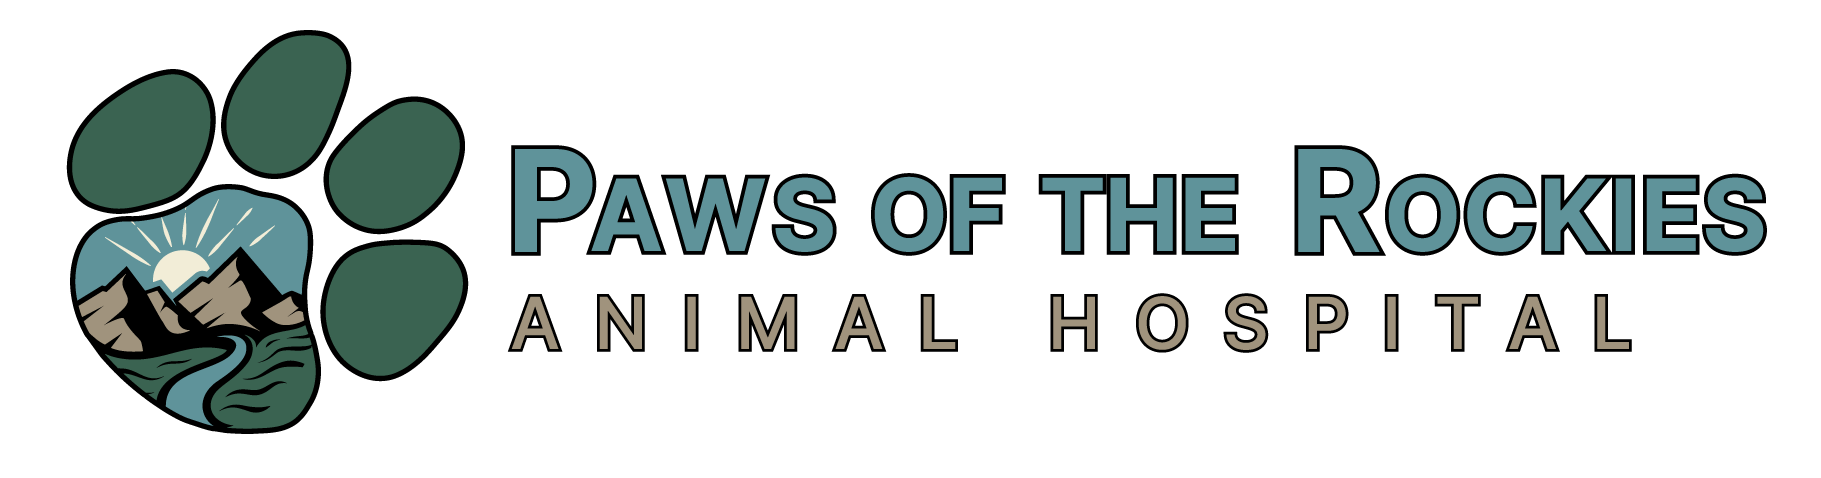 Paws of the Rockies Animal Hospital Logo